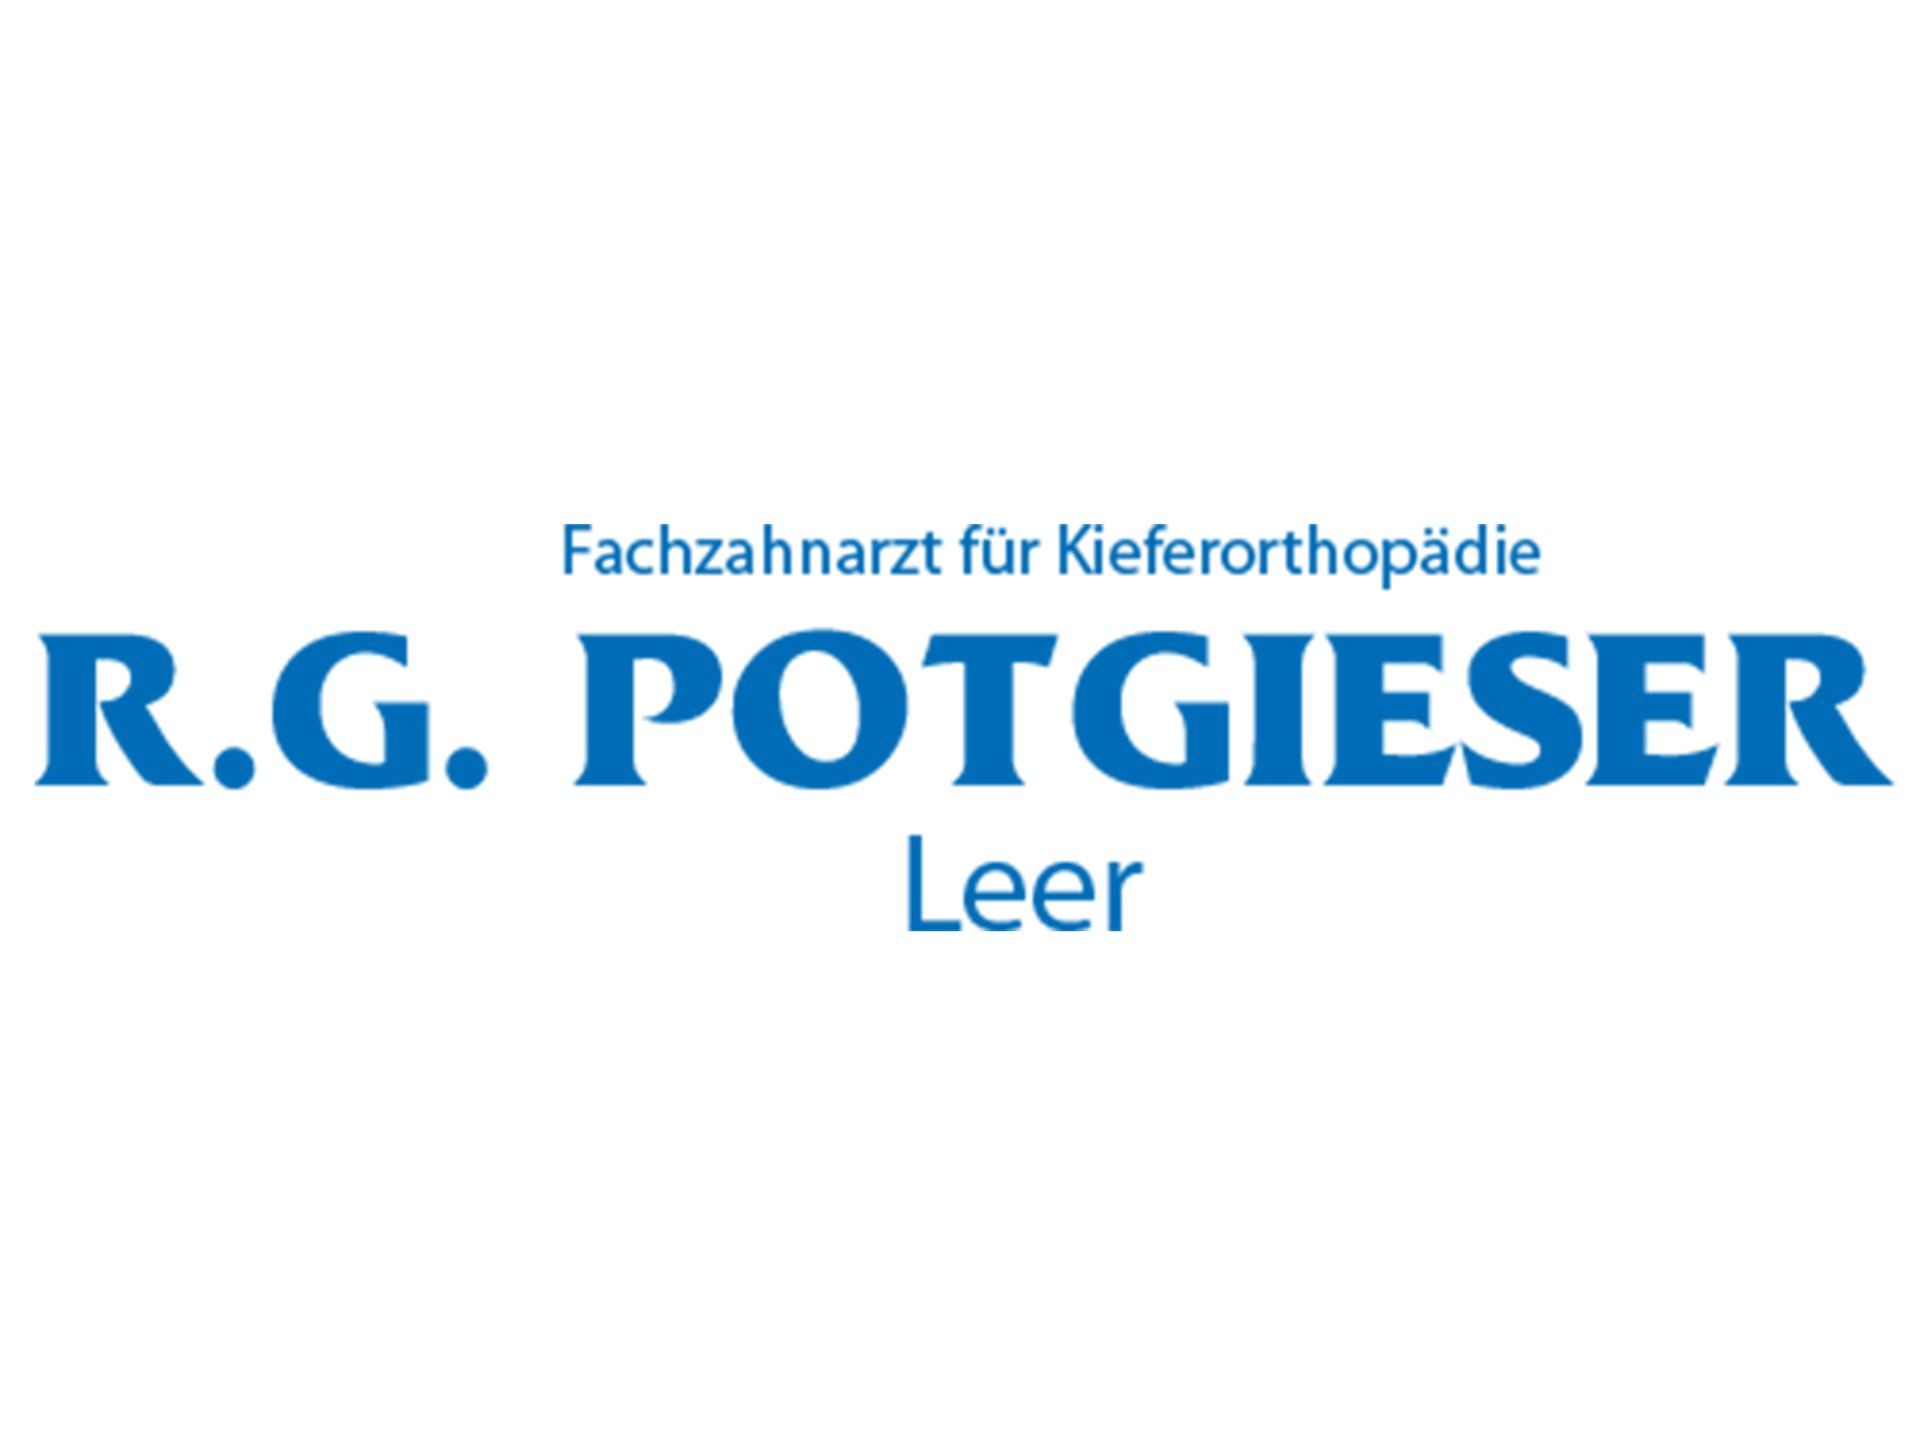 R.G. Potgieser Logo